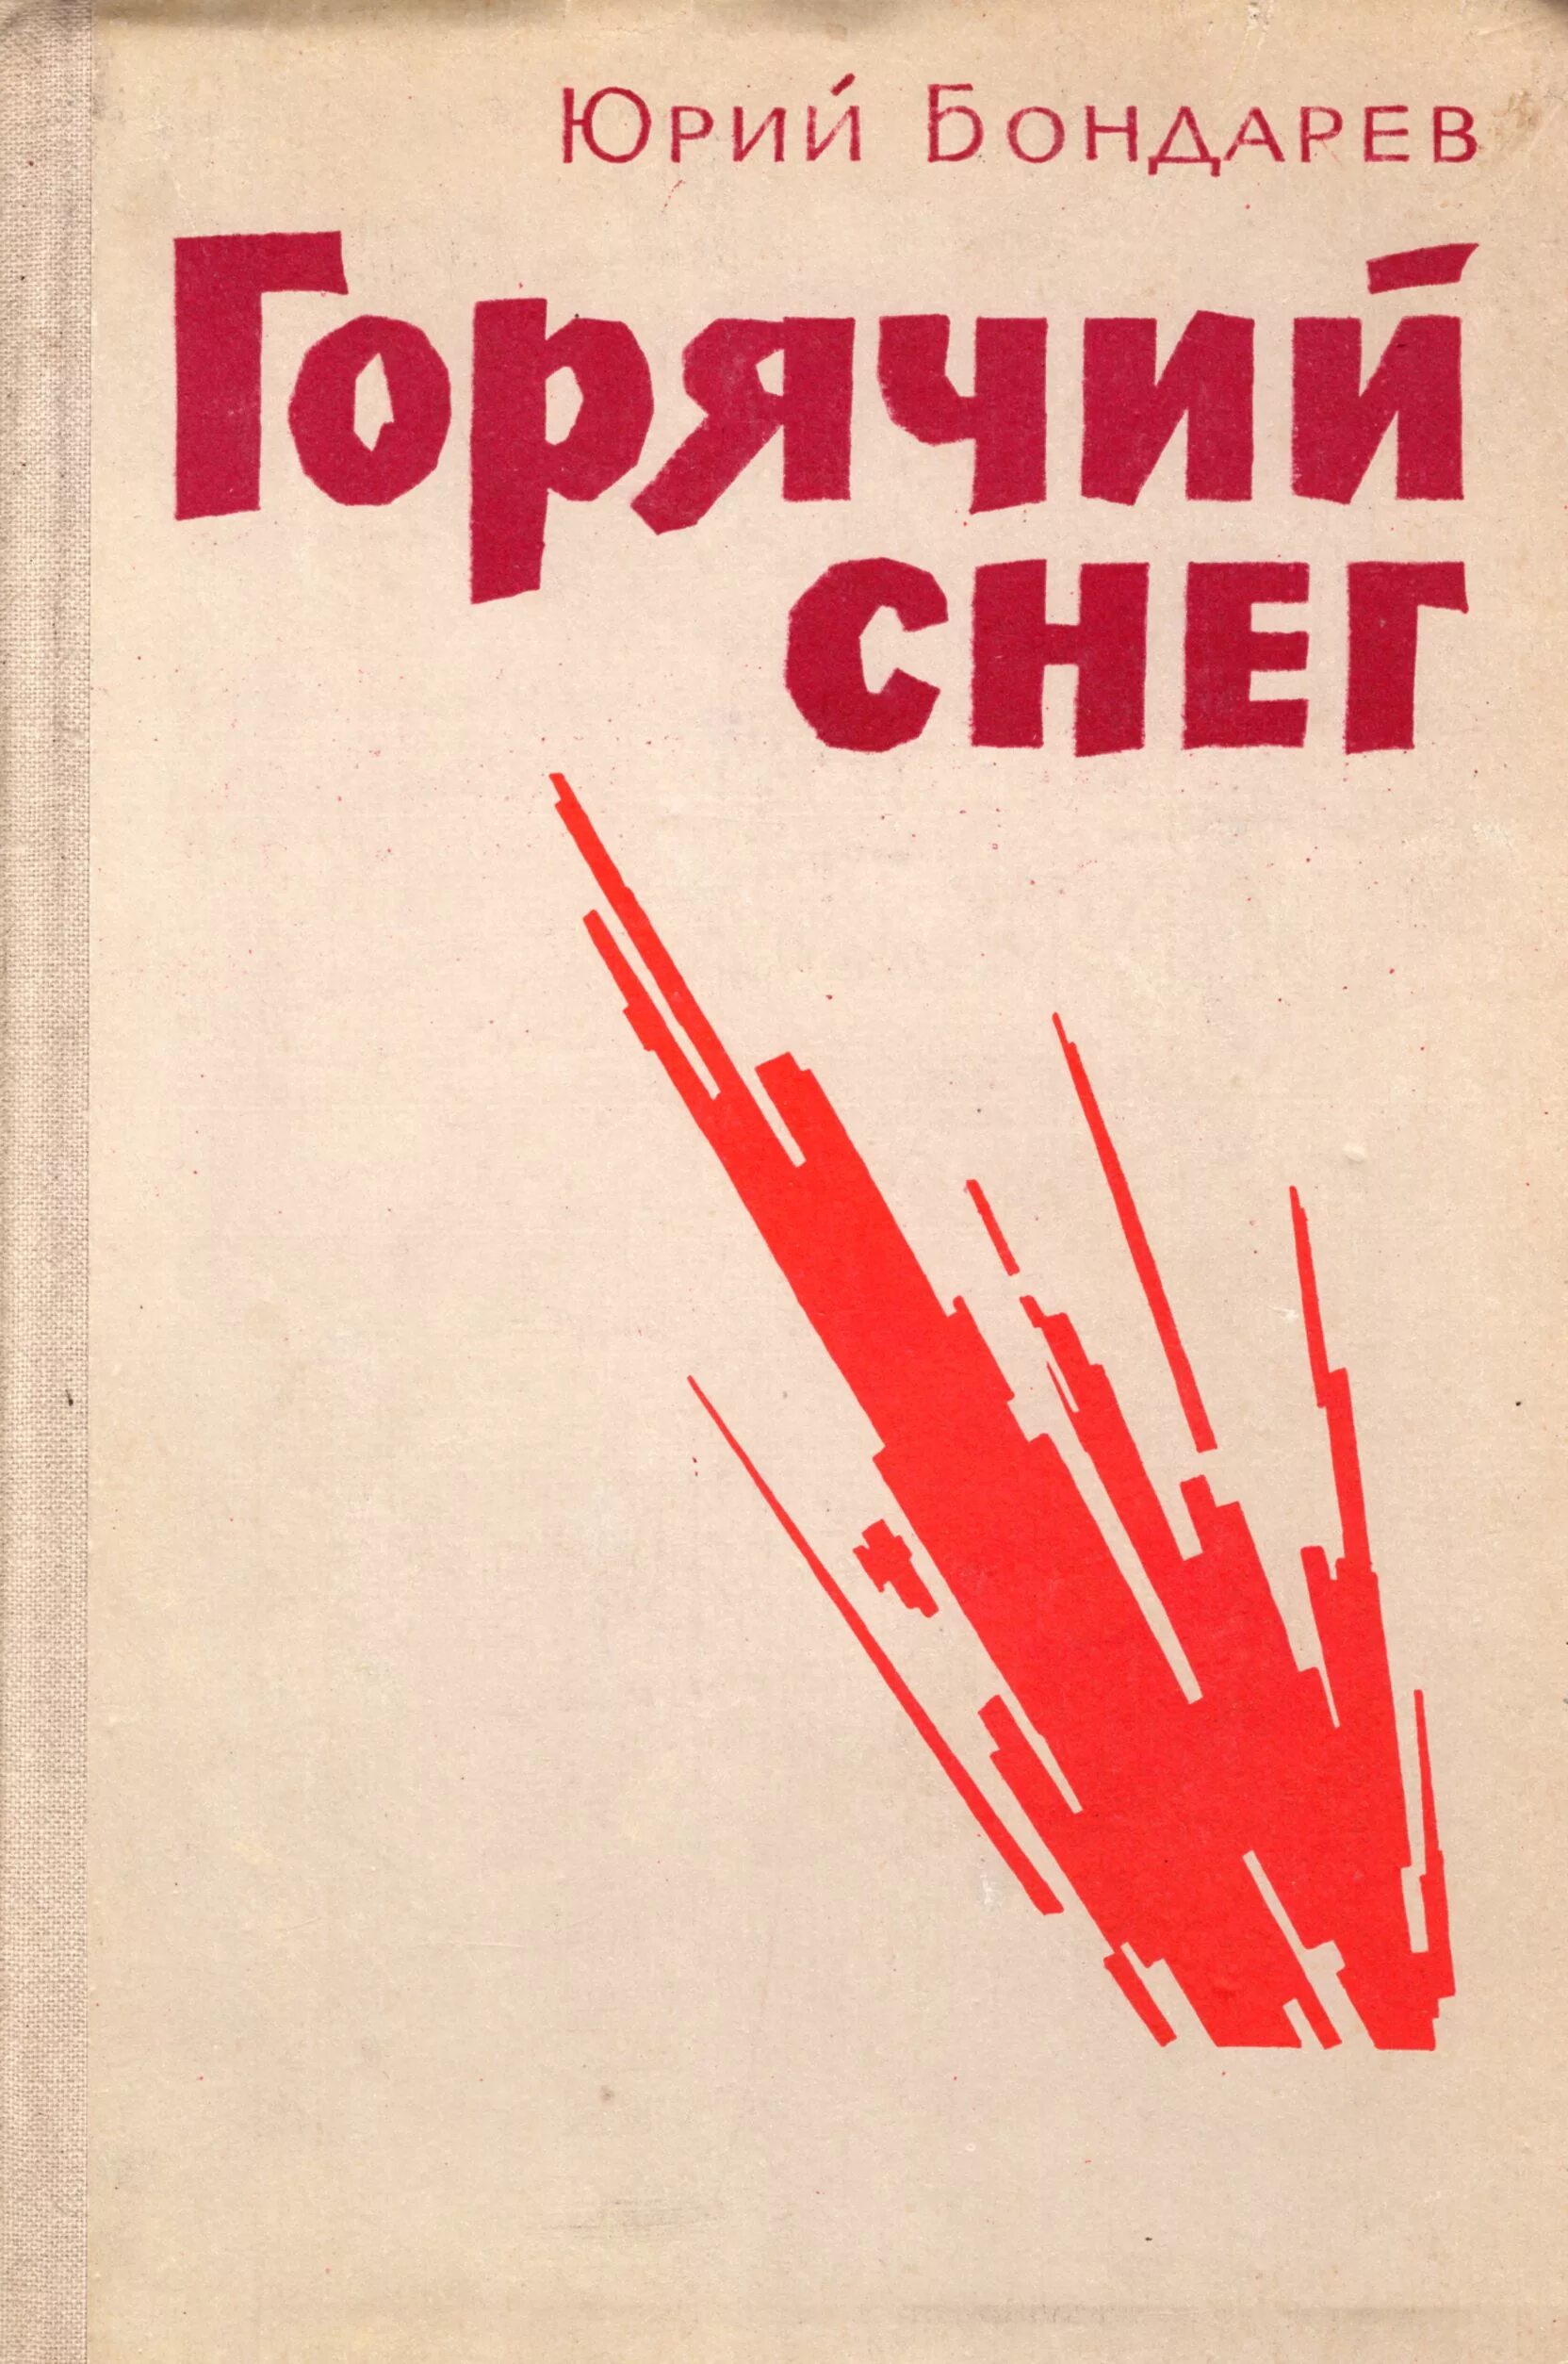 Бондарев писатель книги. Юрия Бондарева («горячий снег», 1969).